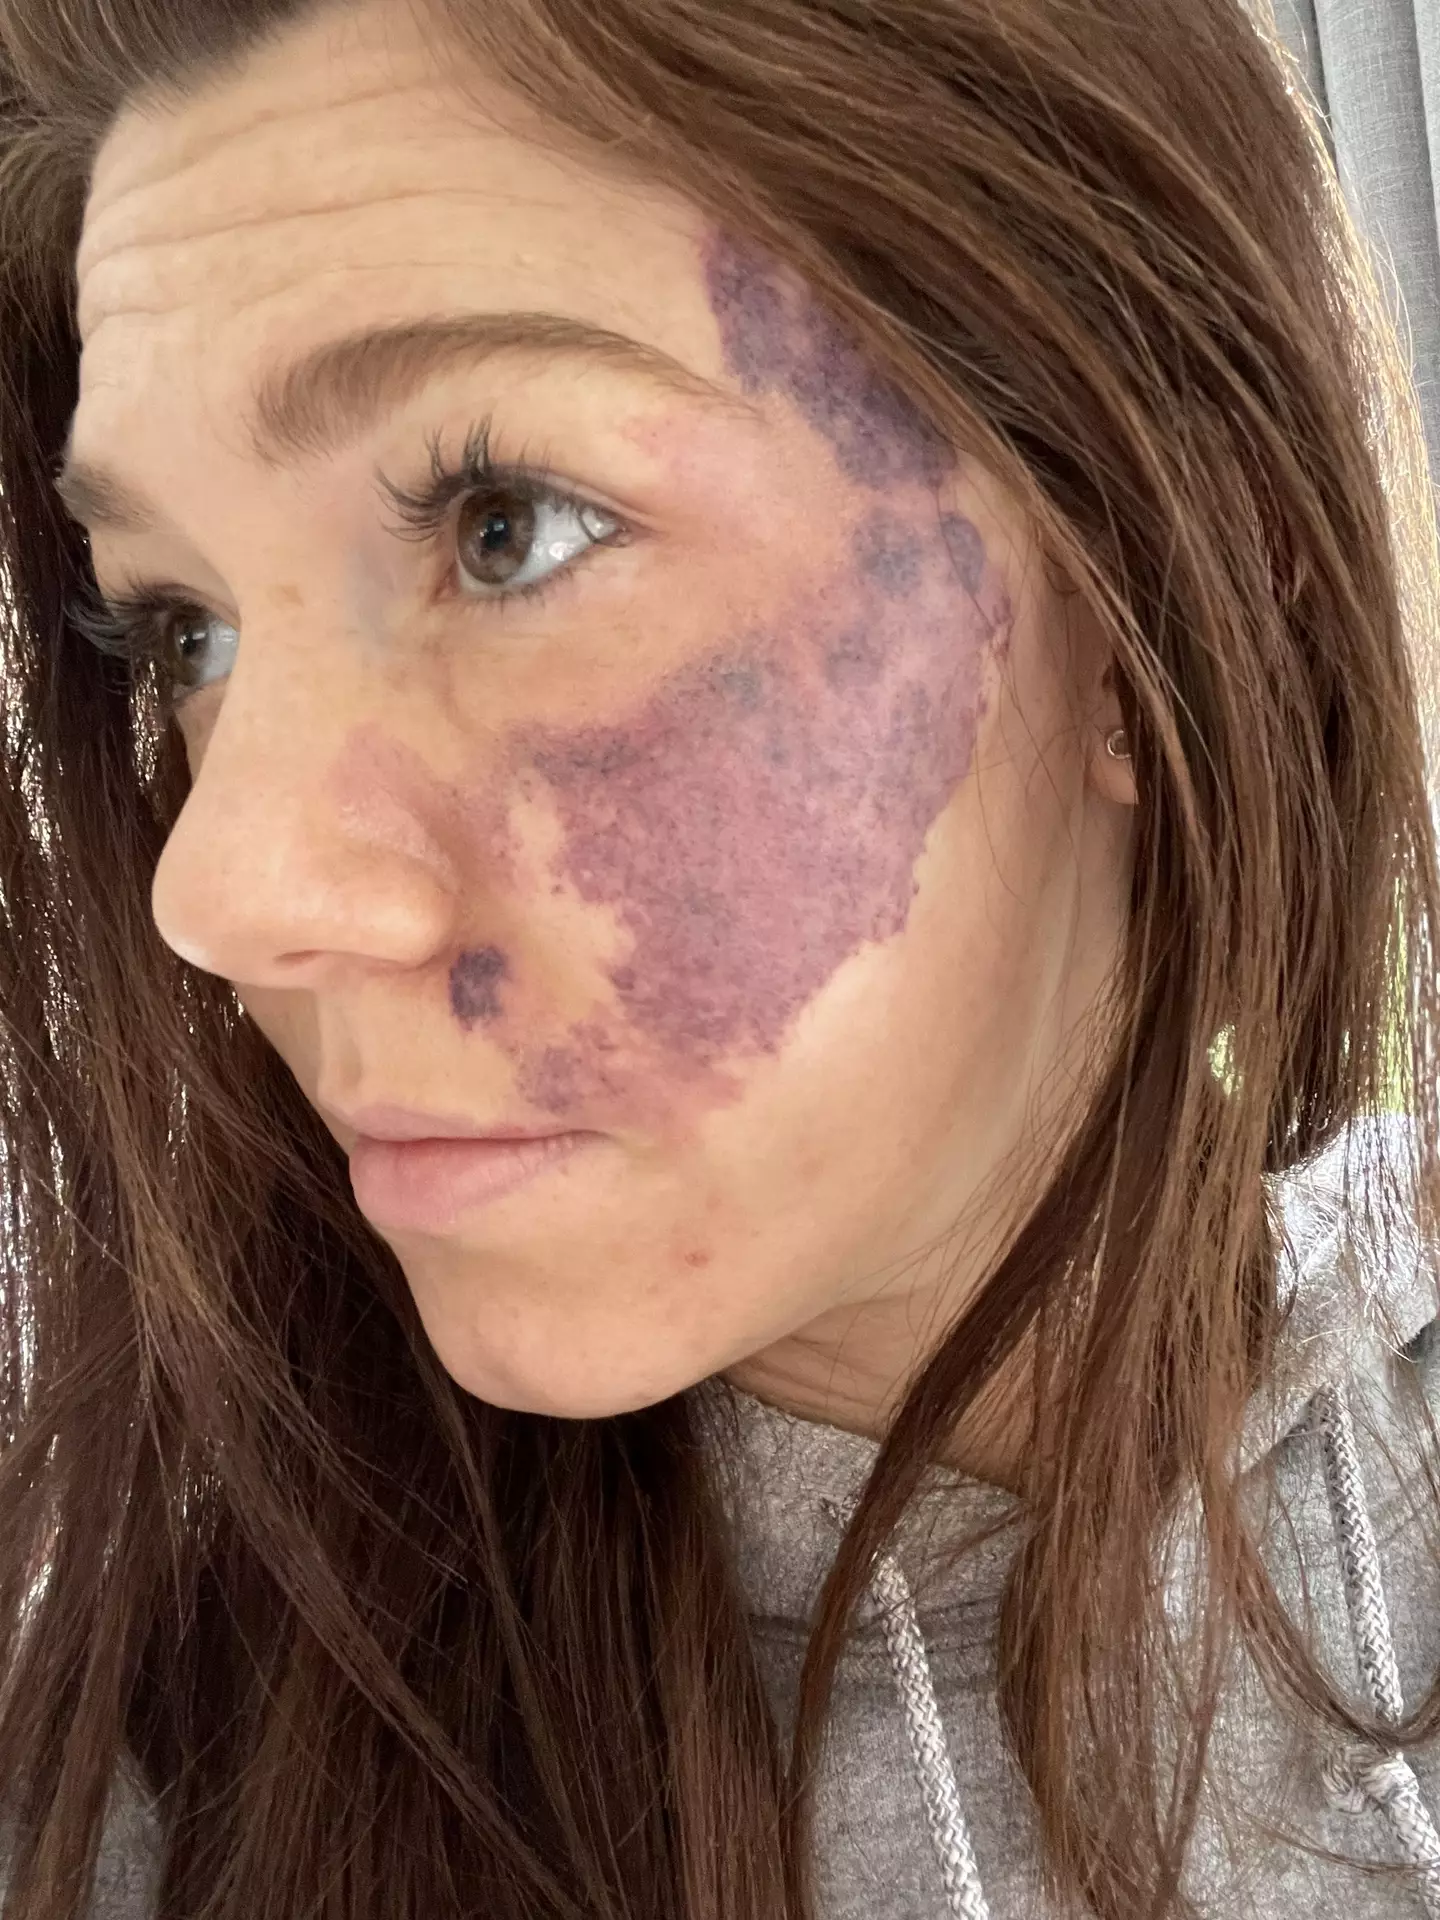 Emily was bullied at school over the birthmark (